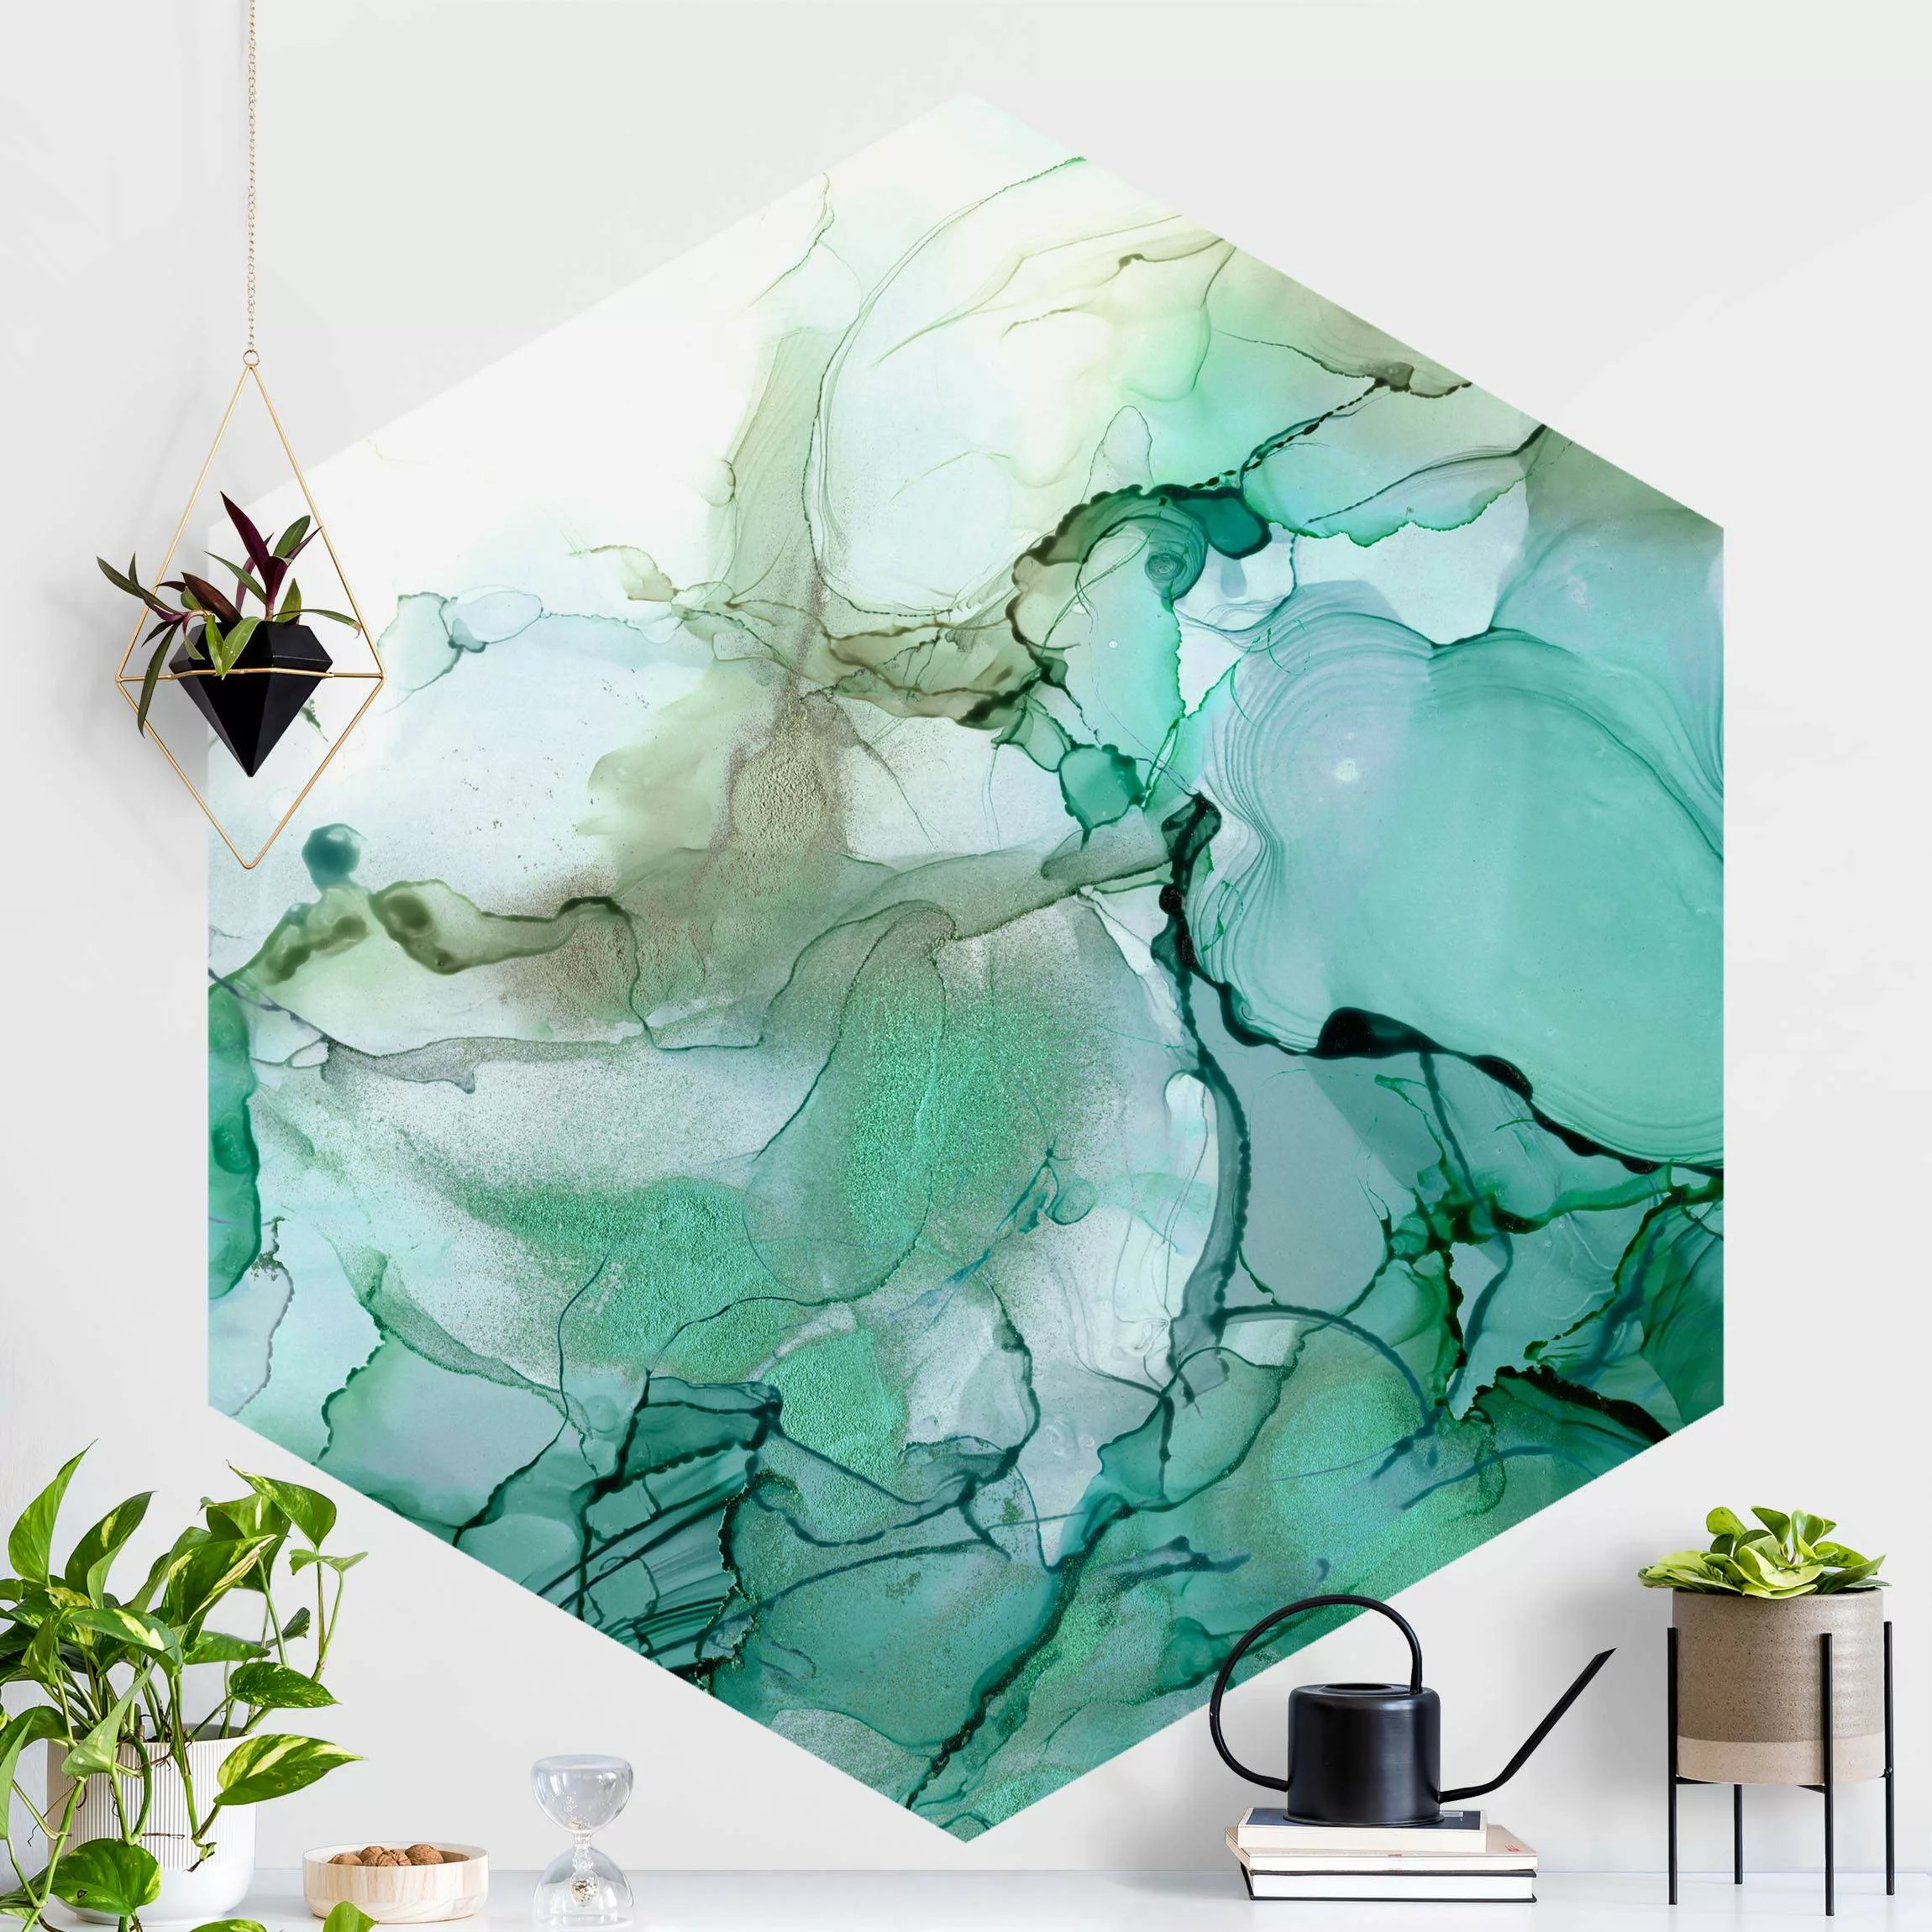 Hexagon Fototapete selbstklebend Smaragdfarbener Sturm günstig online kaufen